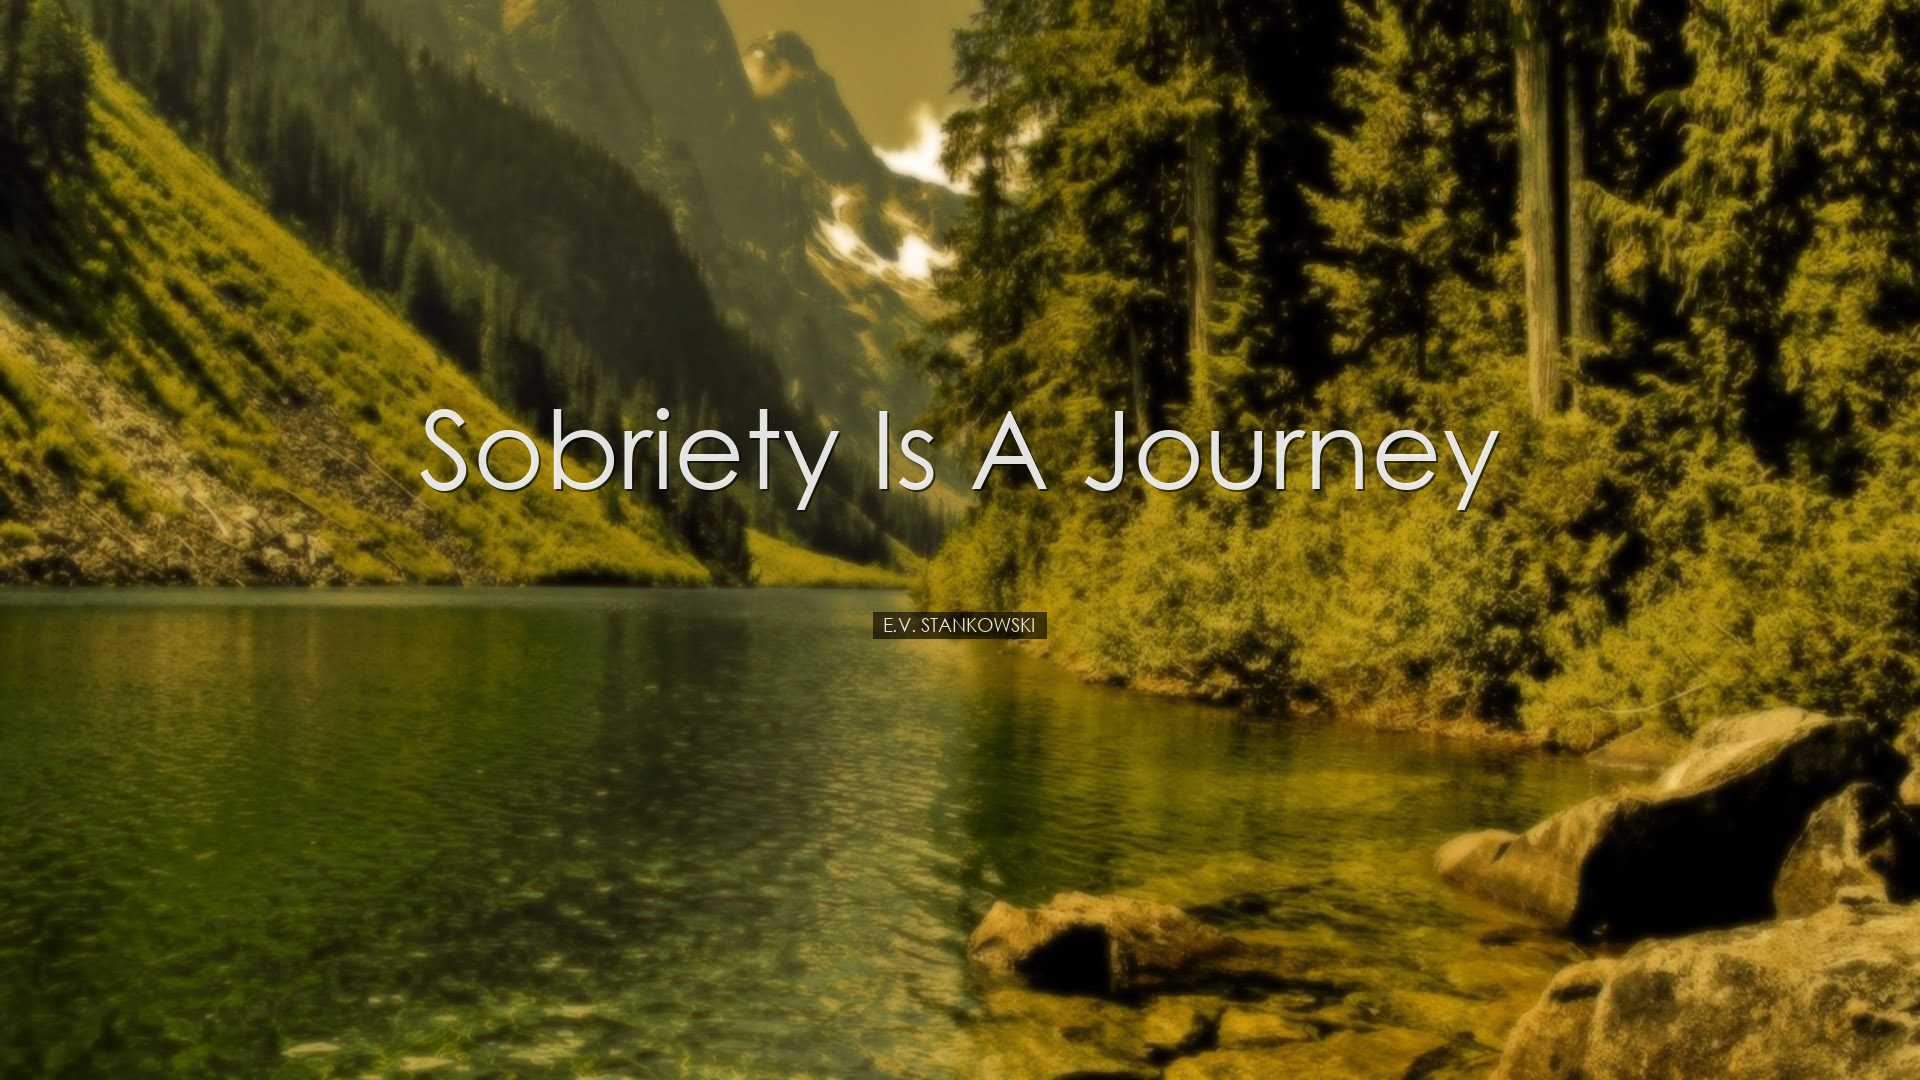 Sobriety is a journey - E.V. Stankowski